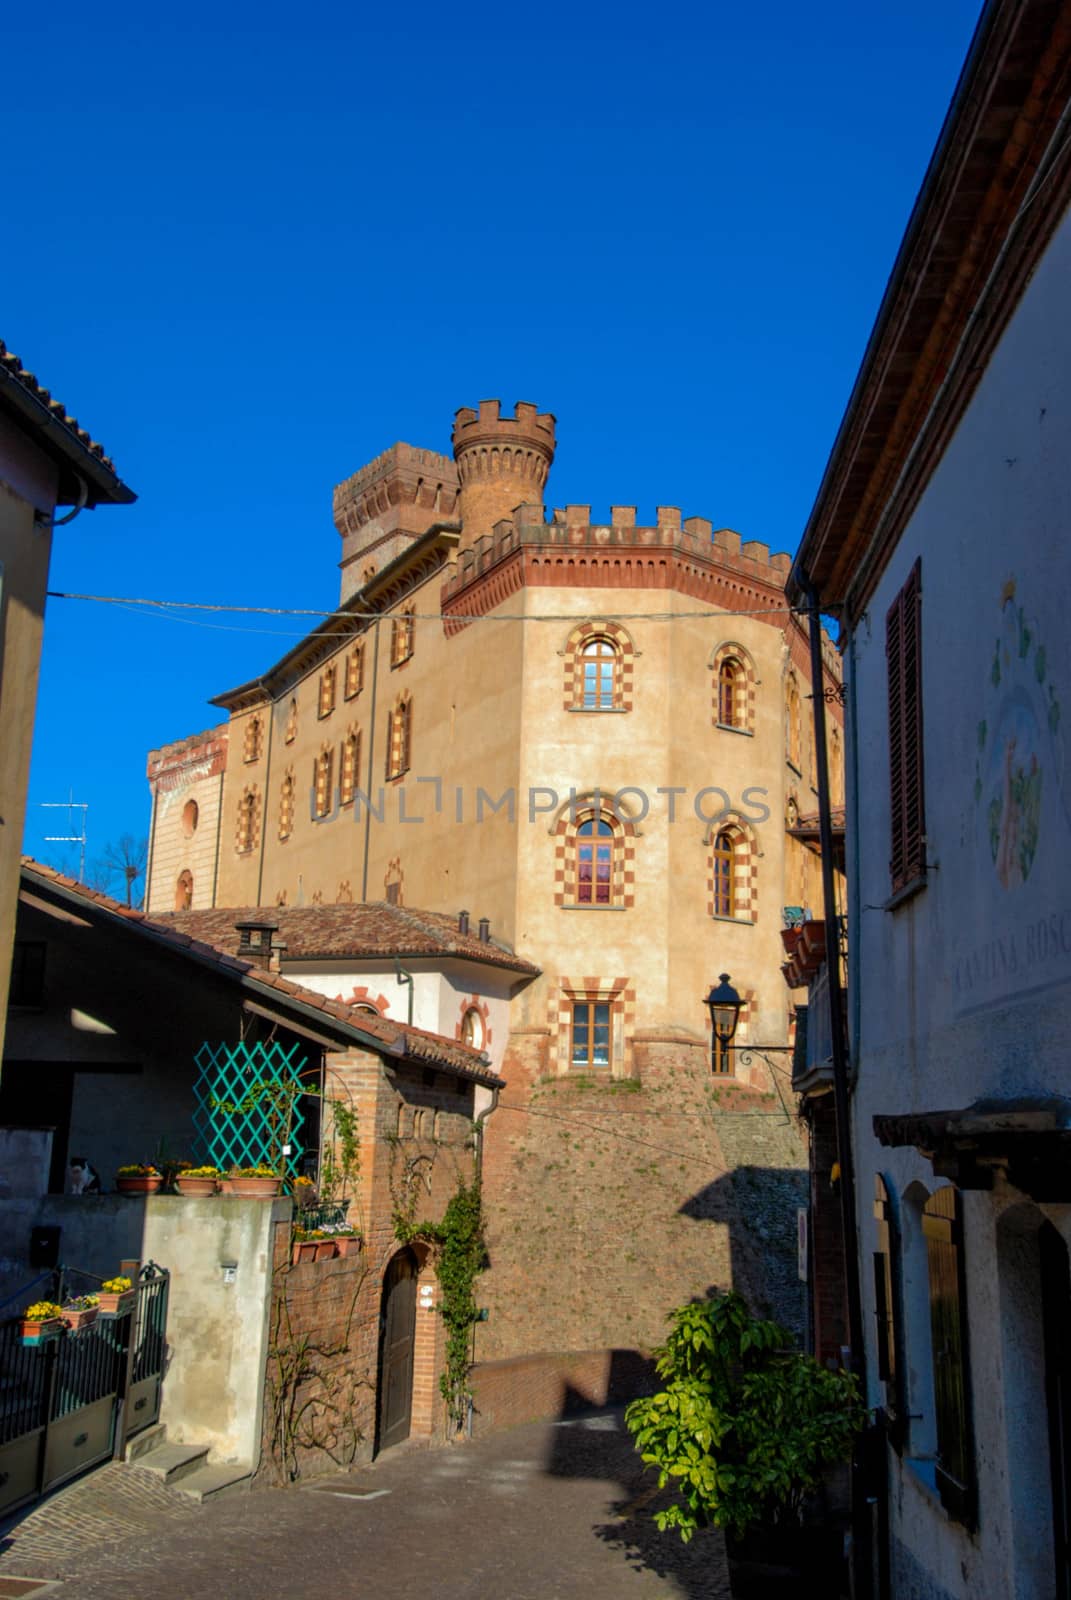 Castle "Falletti" of Barolo, Cuneo - Piedmont by cosca